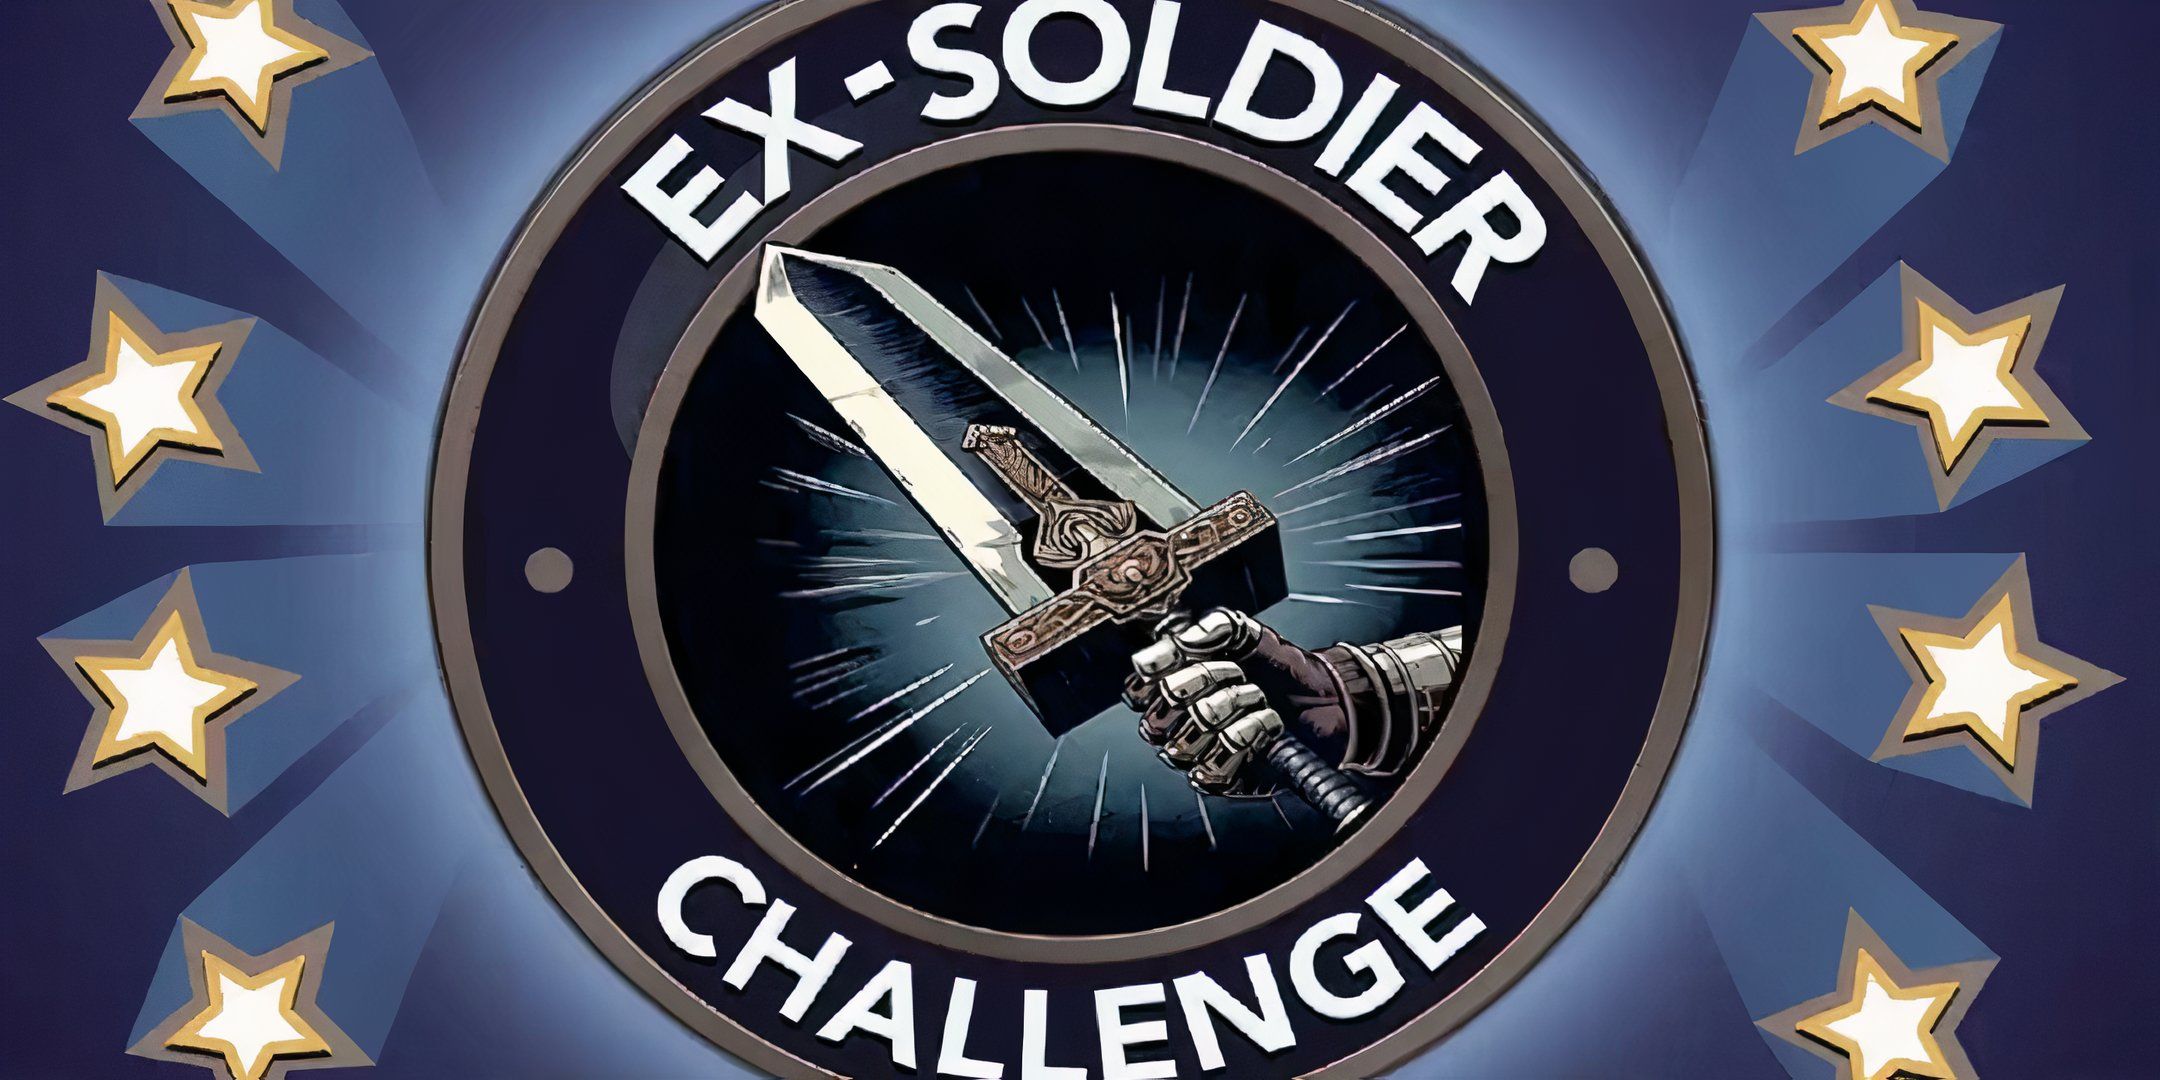 Ex-Soldier Challenge banner in BitLife 